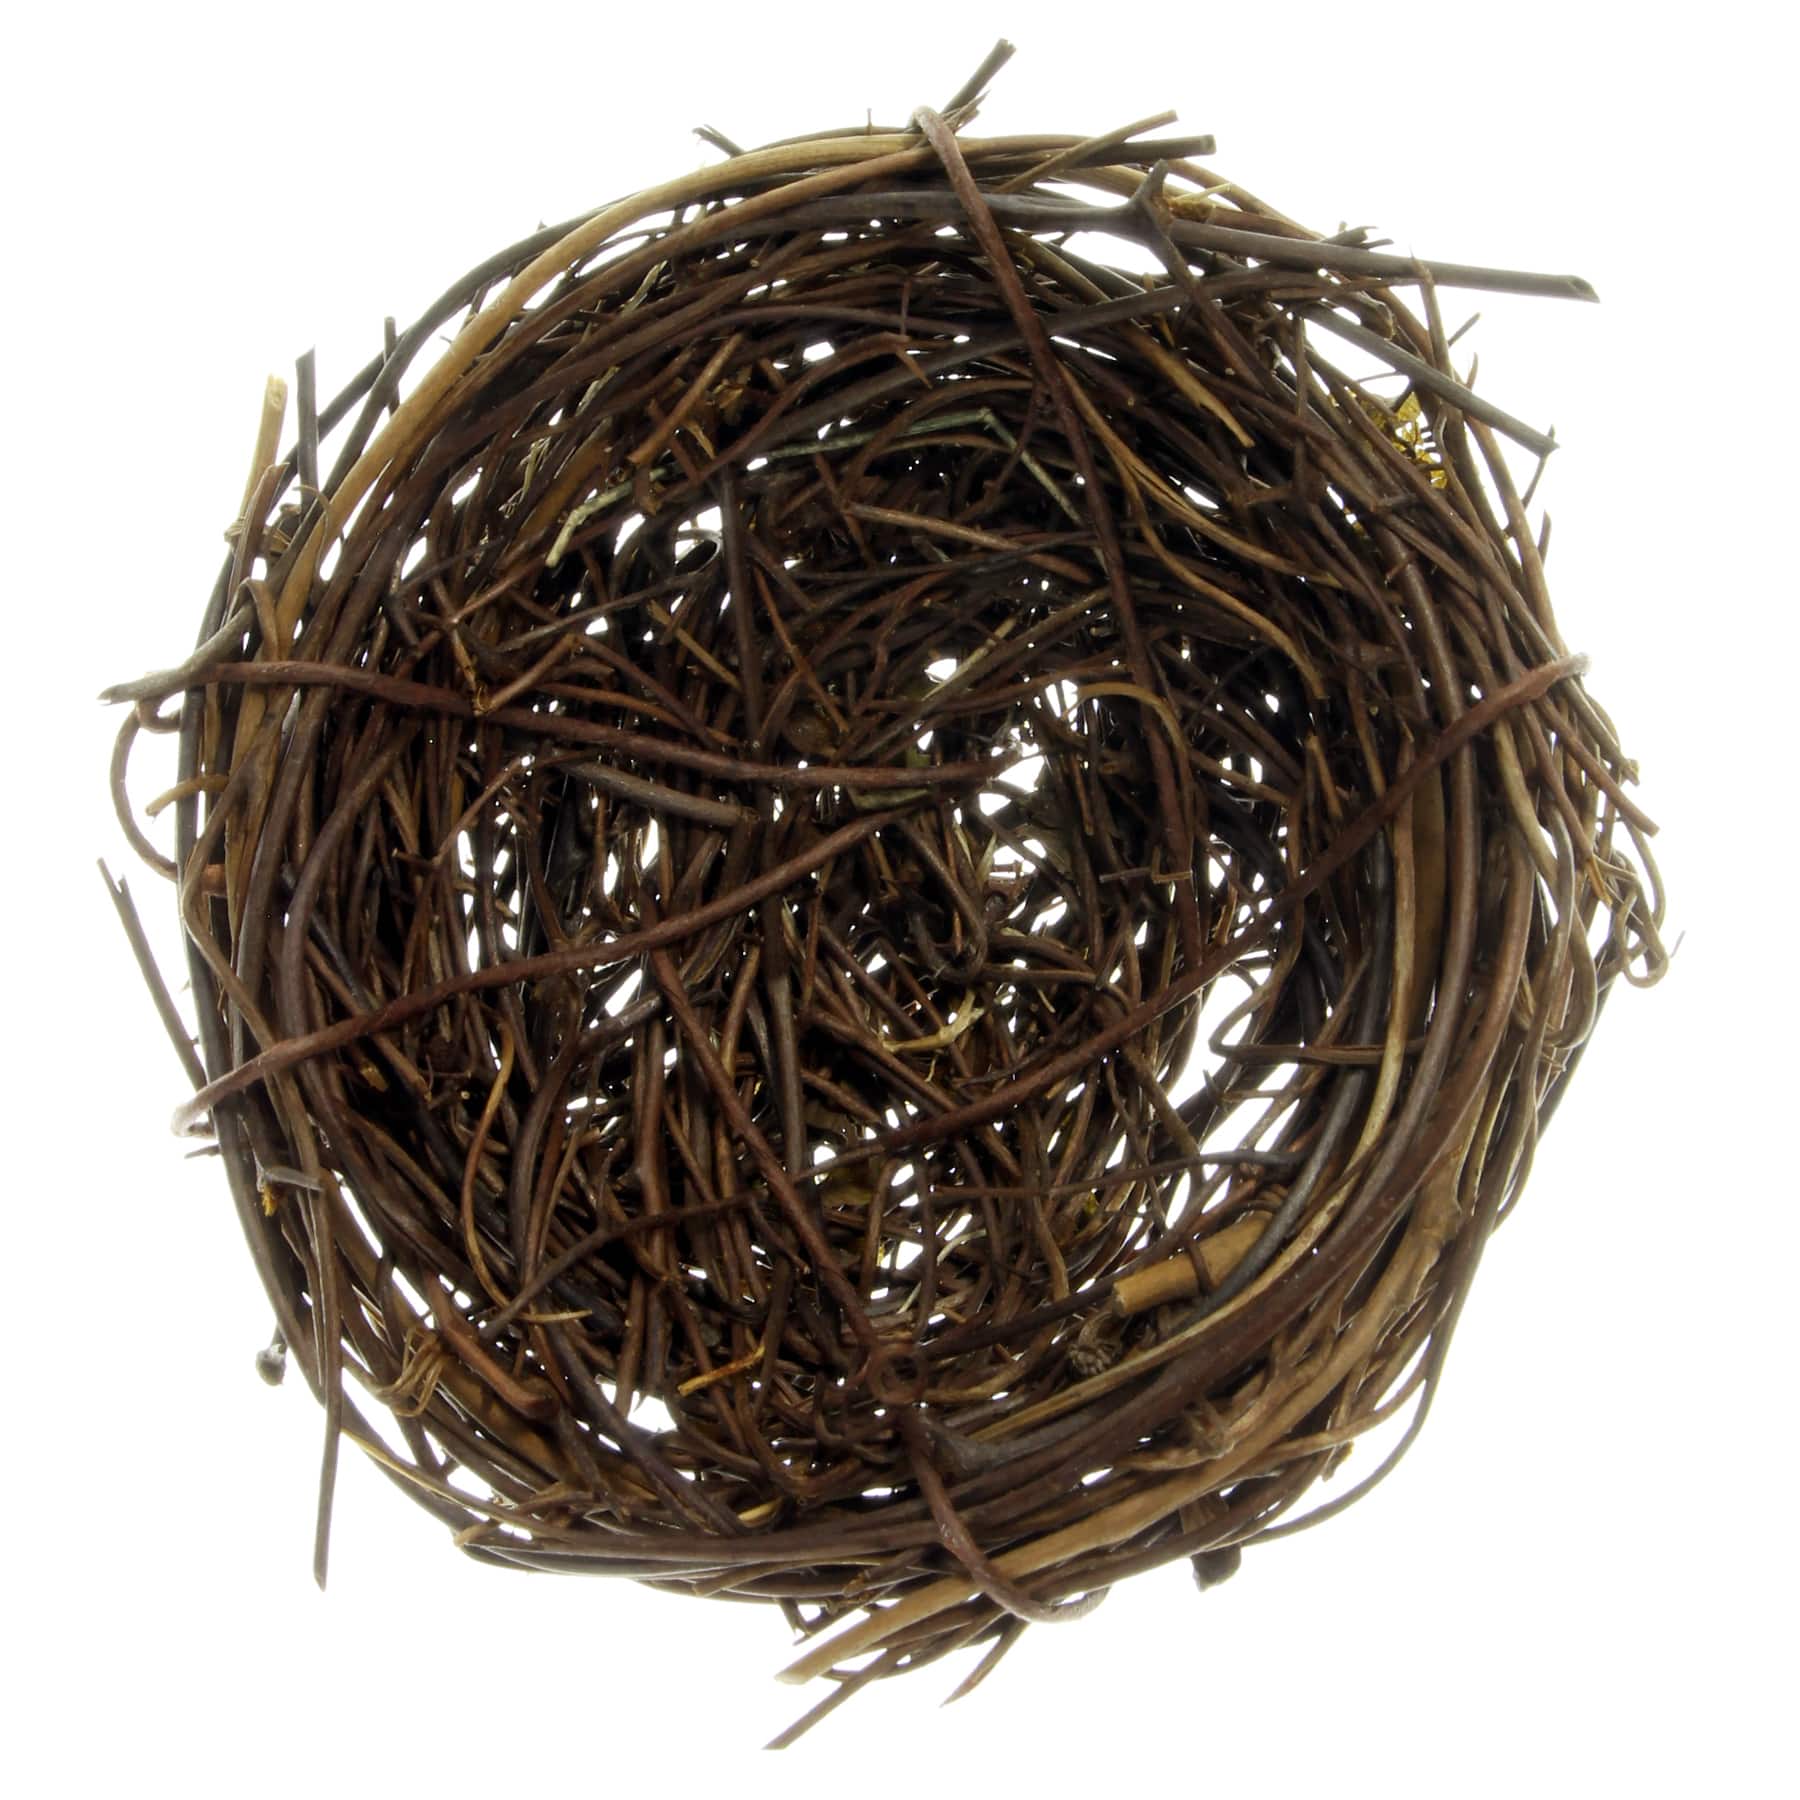 Nest by Ashland&#xAE;